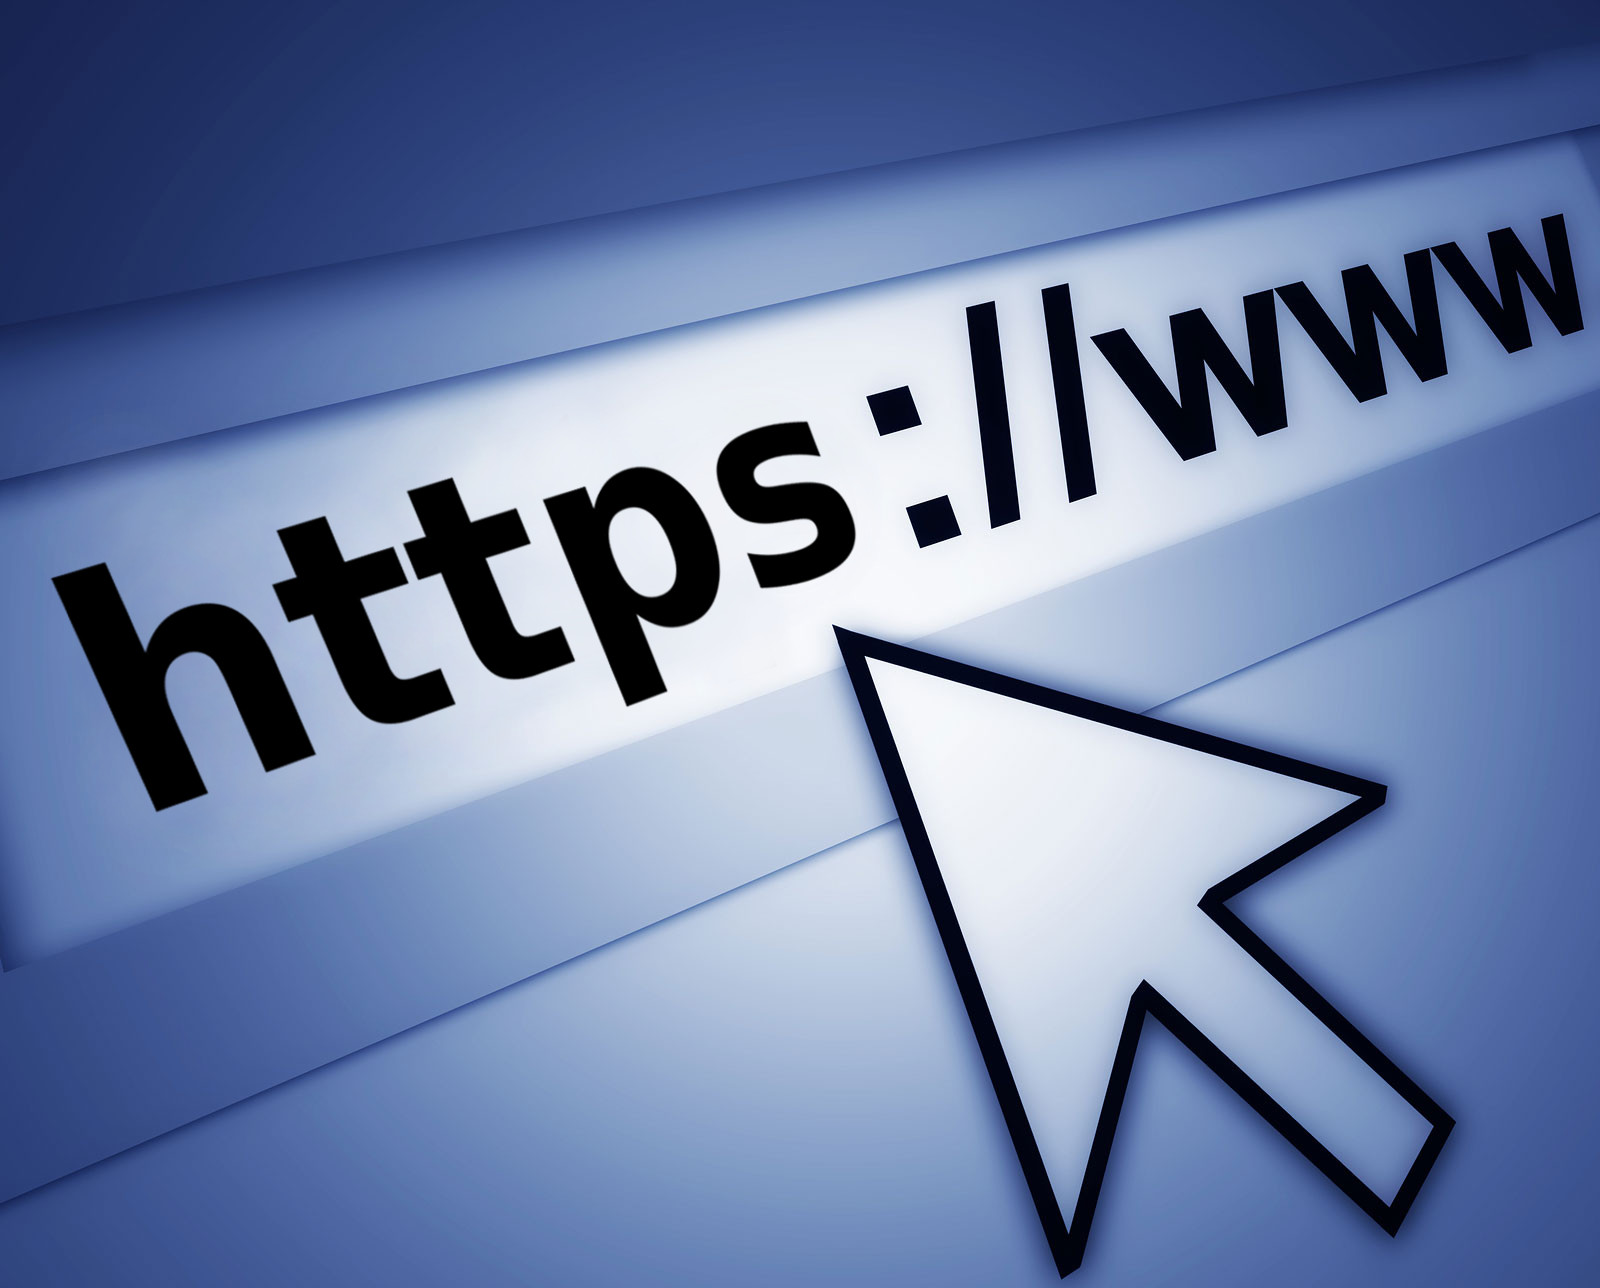 HTTPS indicates SSL Secure Socket Layer